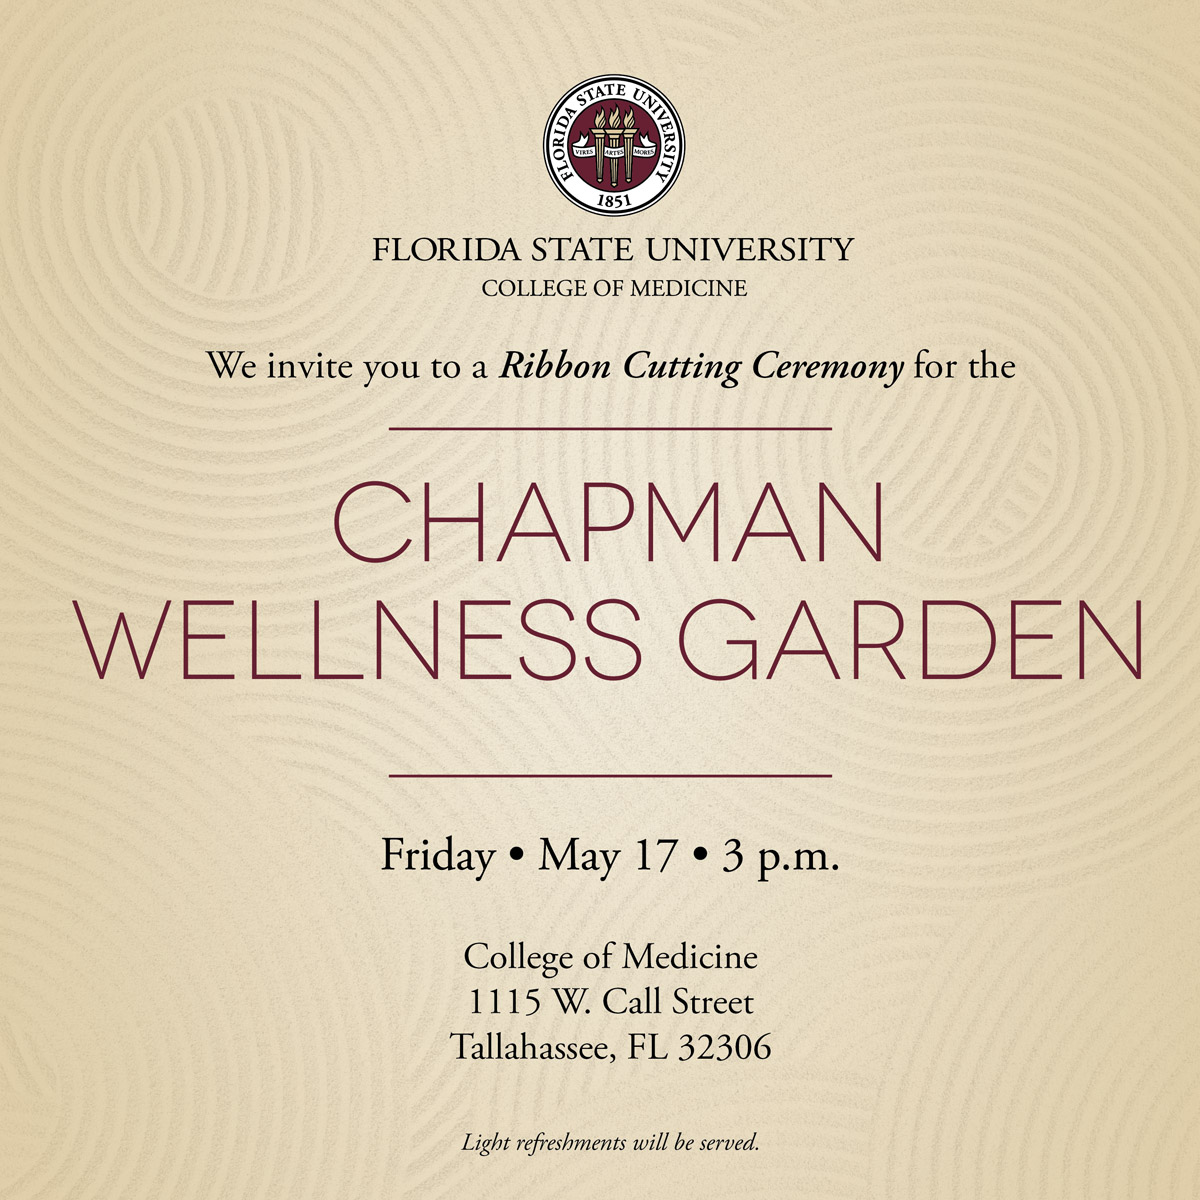 Chapman Wellness Garden